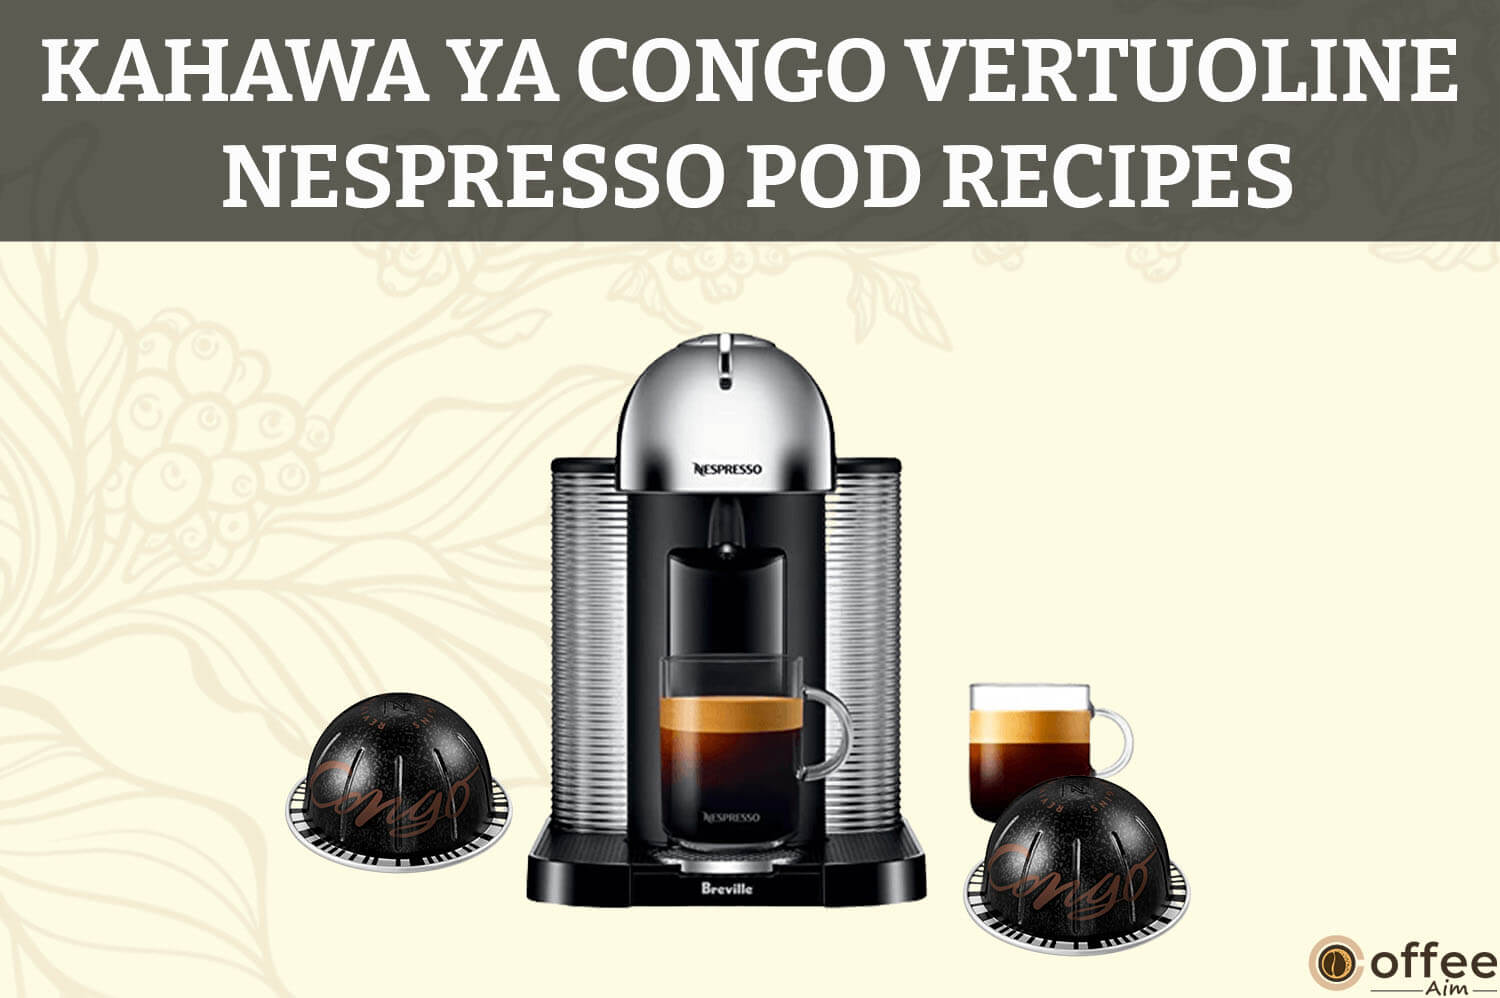 Featured image for the article "Kahawa Ya Congo VertuoLine Nespresso Pod Recipes"